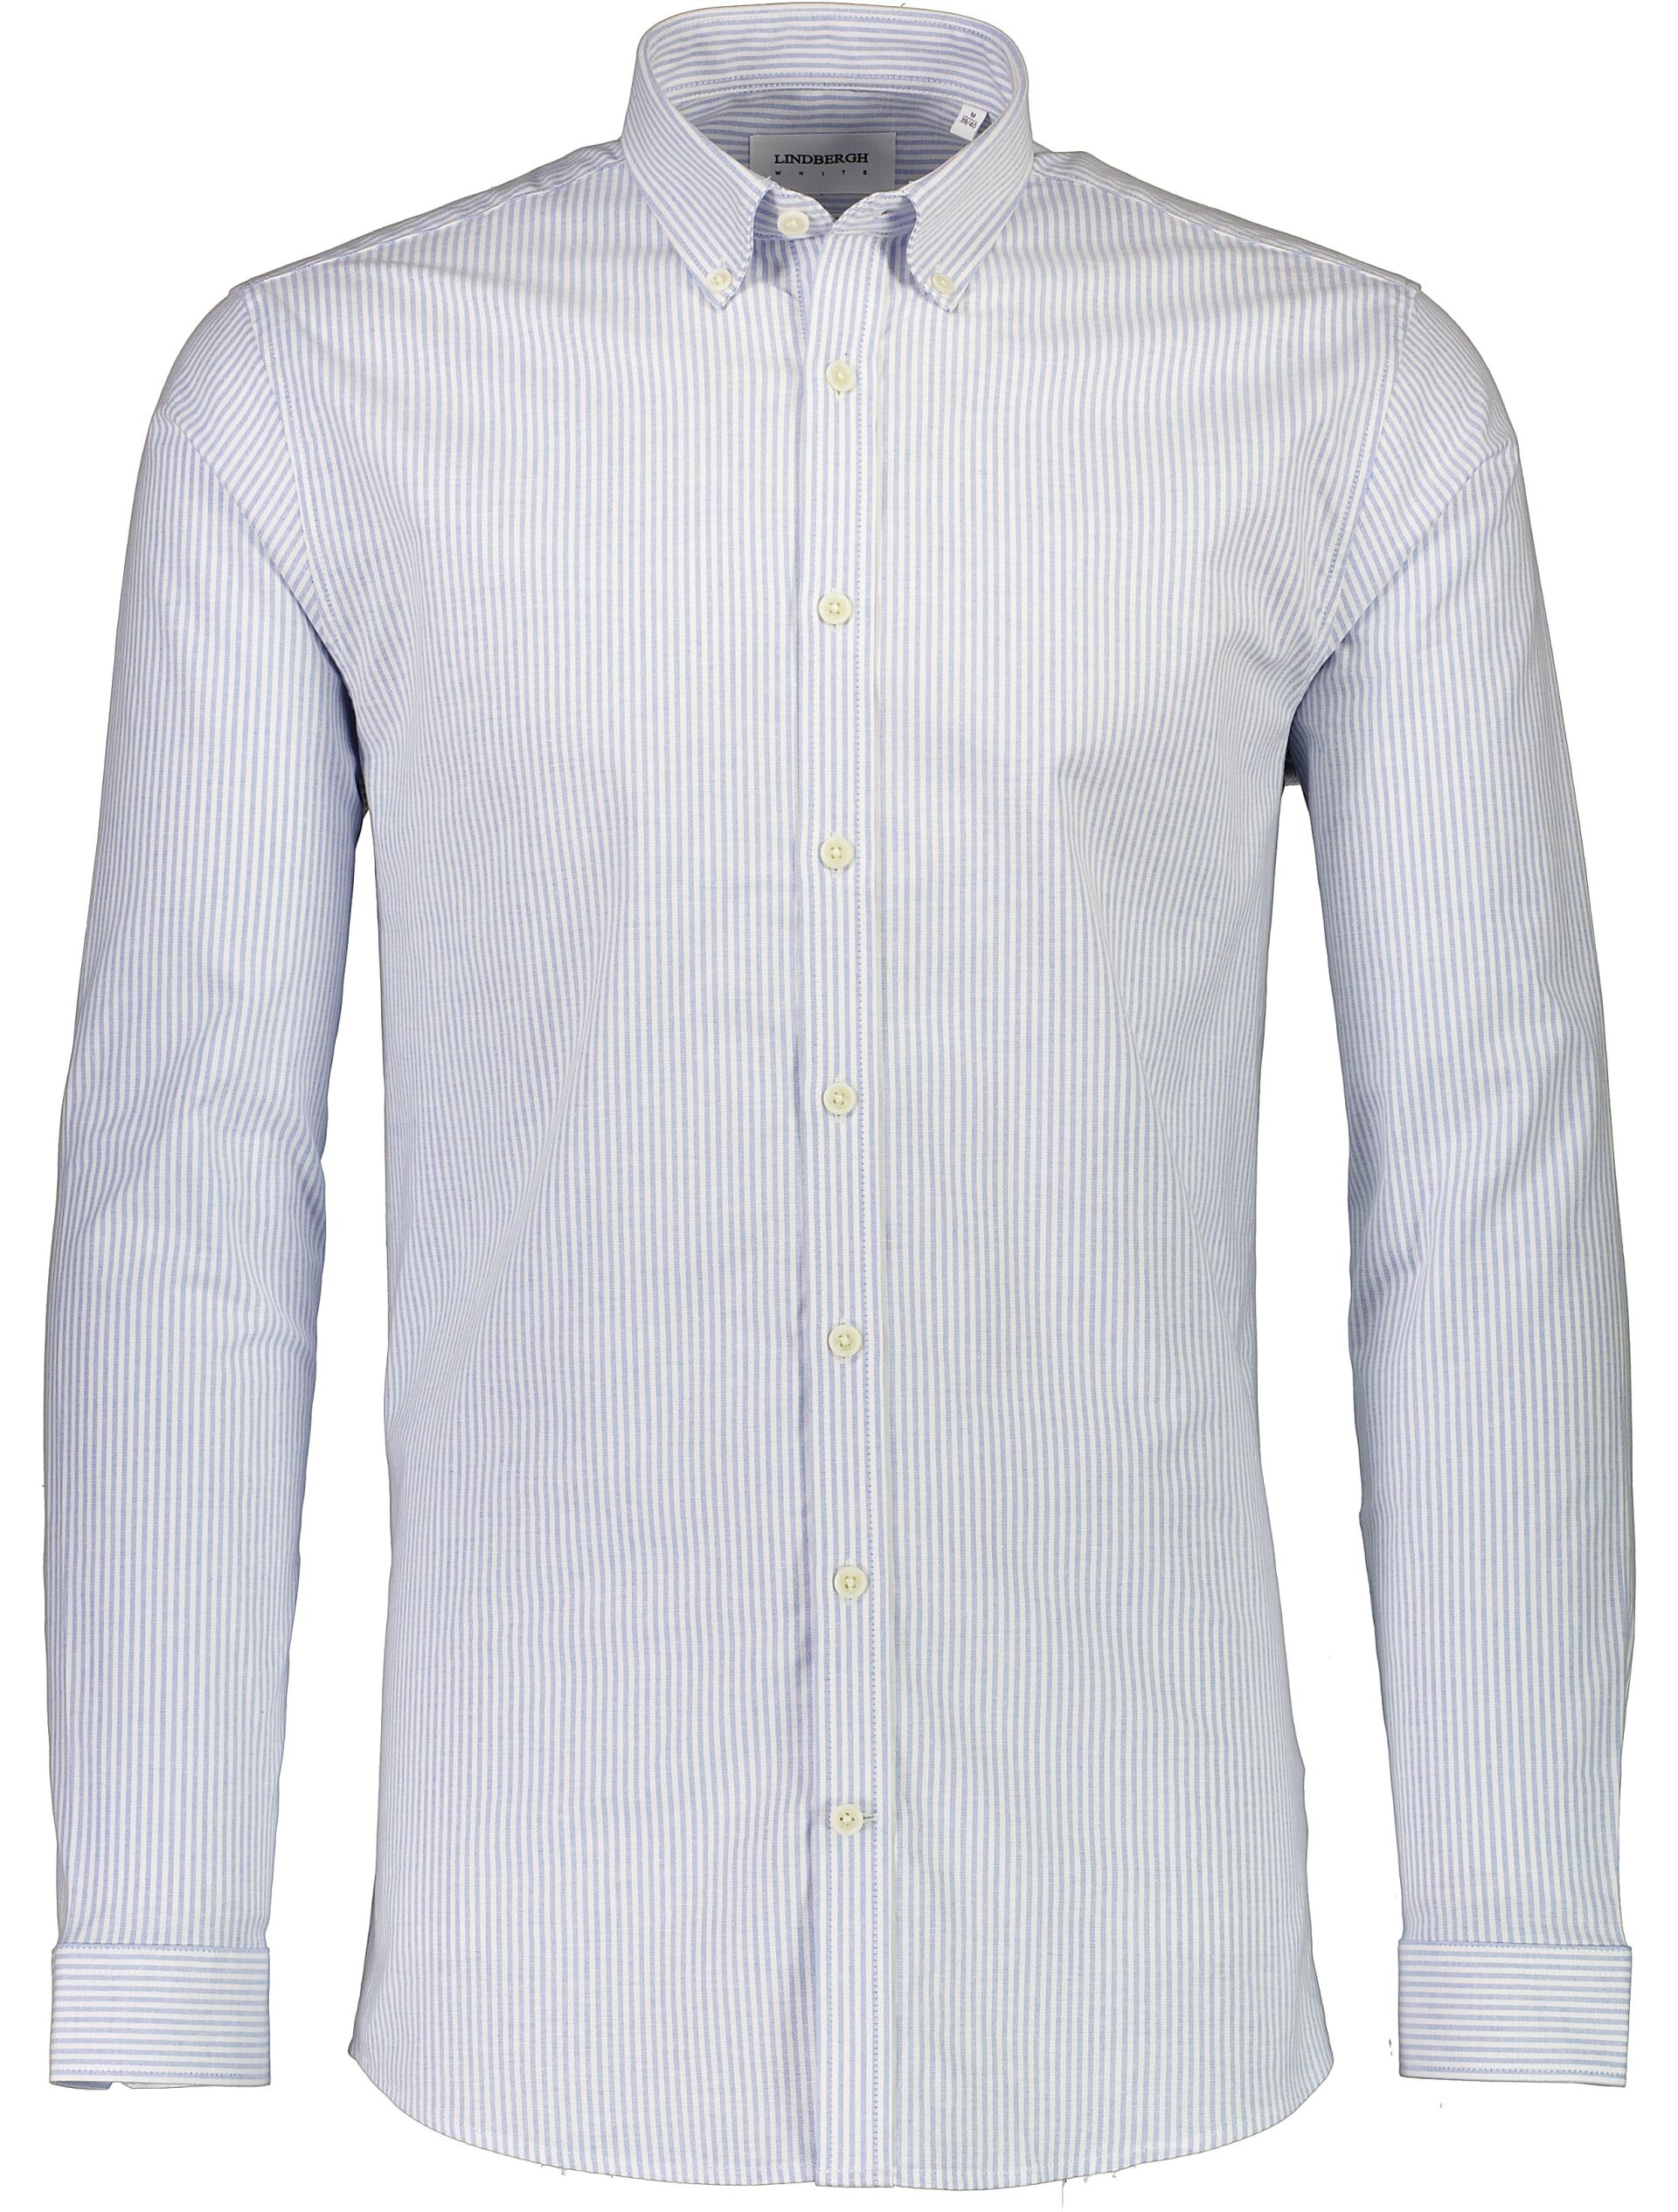 Oxford shirt Oxford shirt Blue 30-203296K